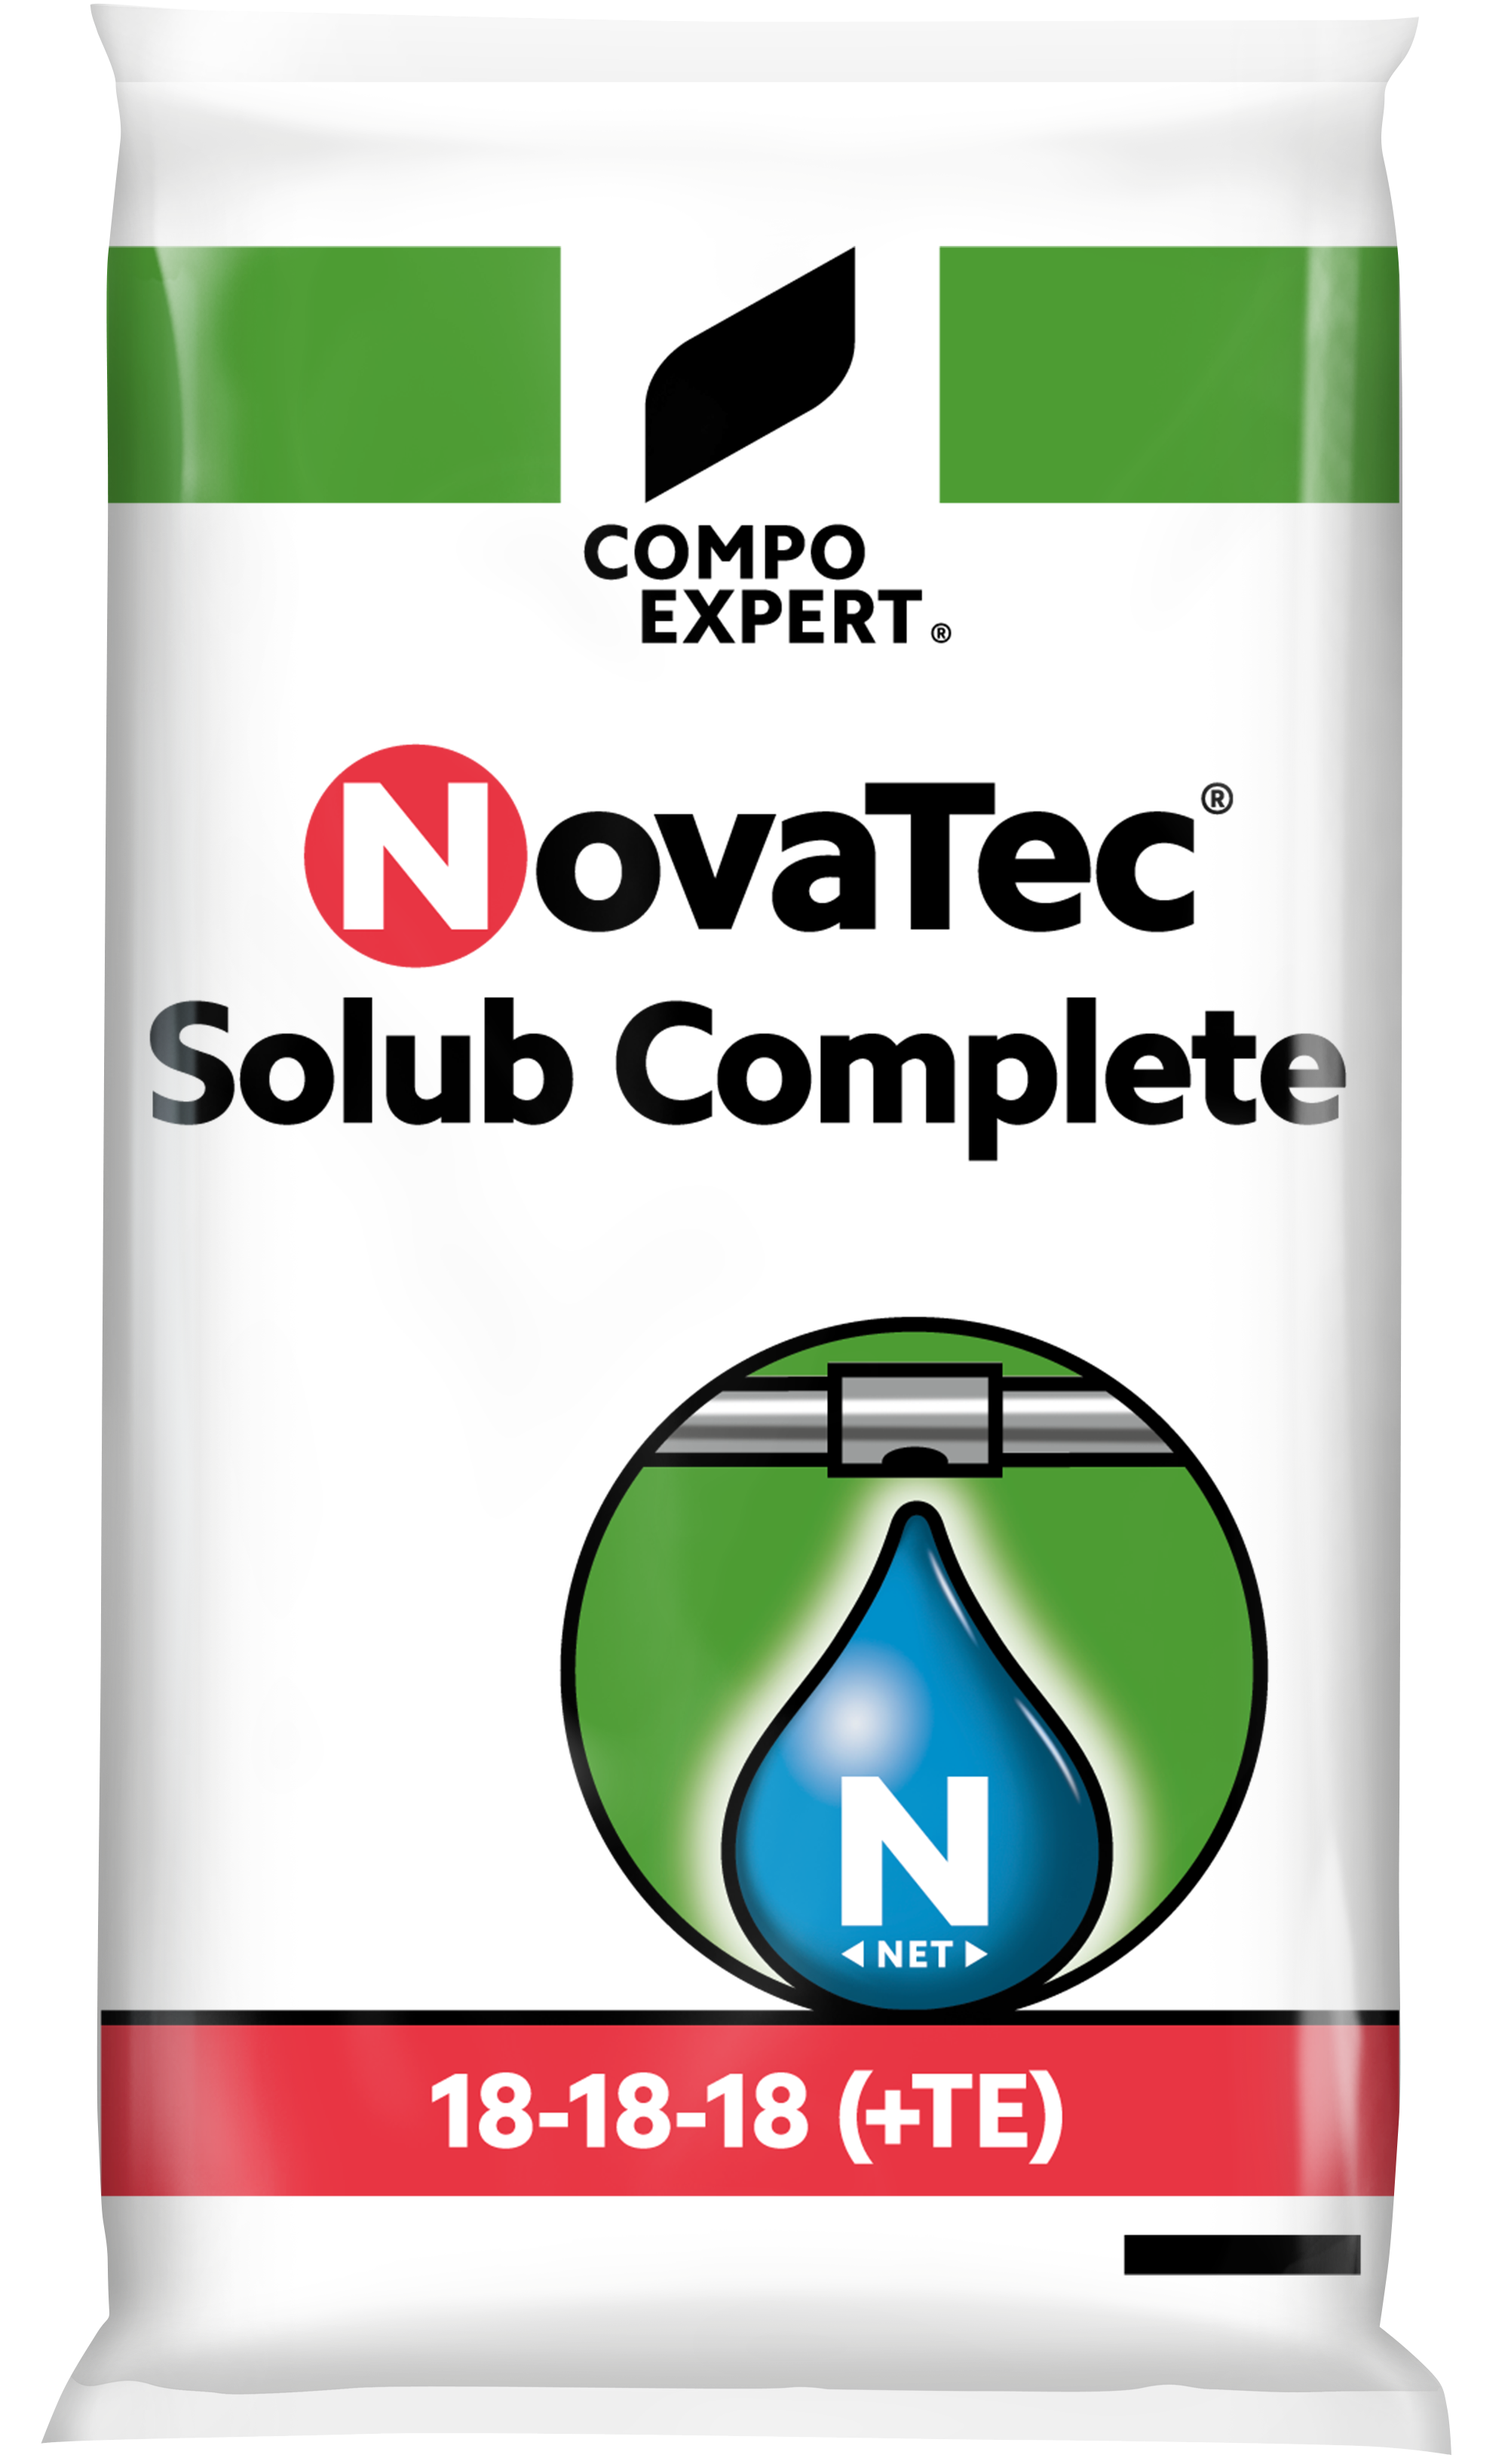 Compo-Expert NovaTec Solub Complete (18-18-18) per KG (soluble fertiliser)